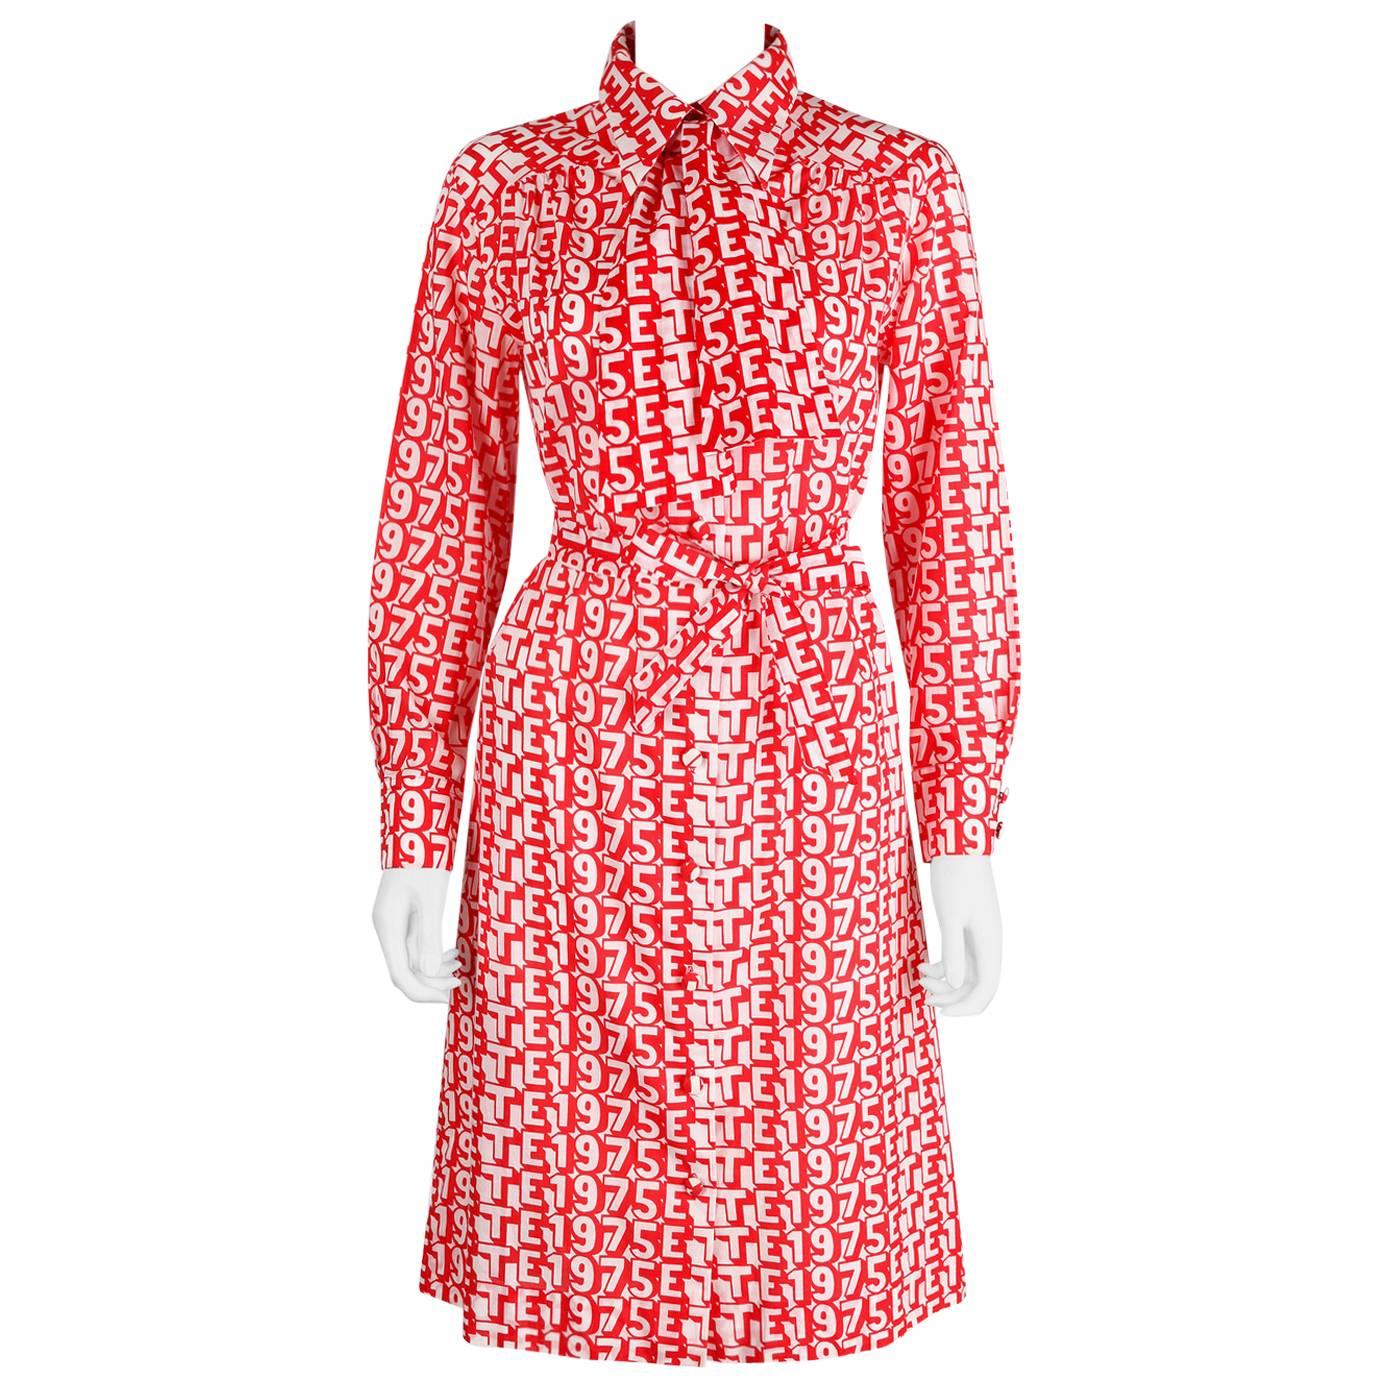 LANVIN S/S 1975 "ETE 1975" Red White Print Button Up Cotton Shirt Dress Size 14